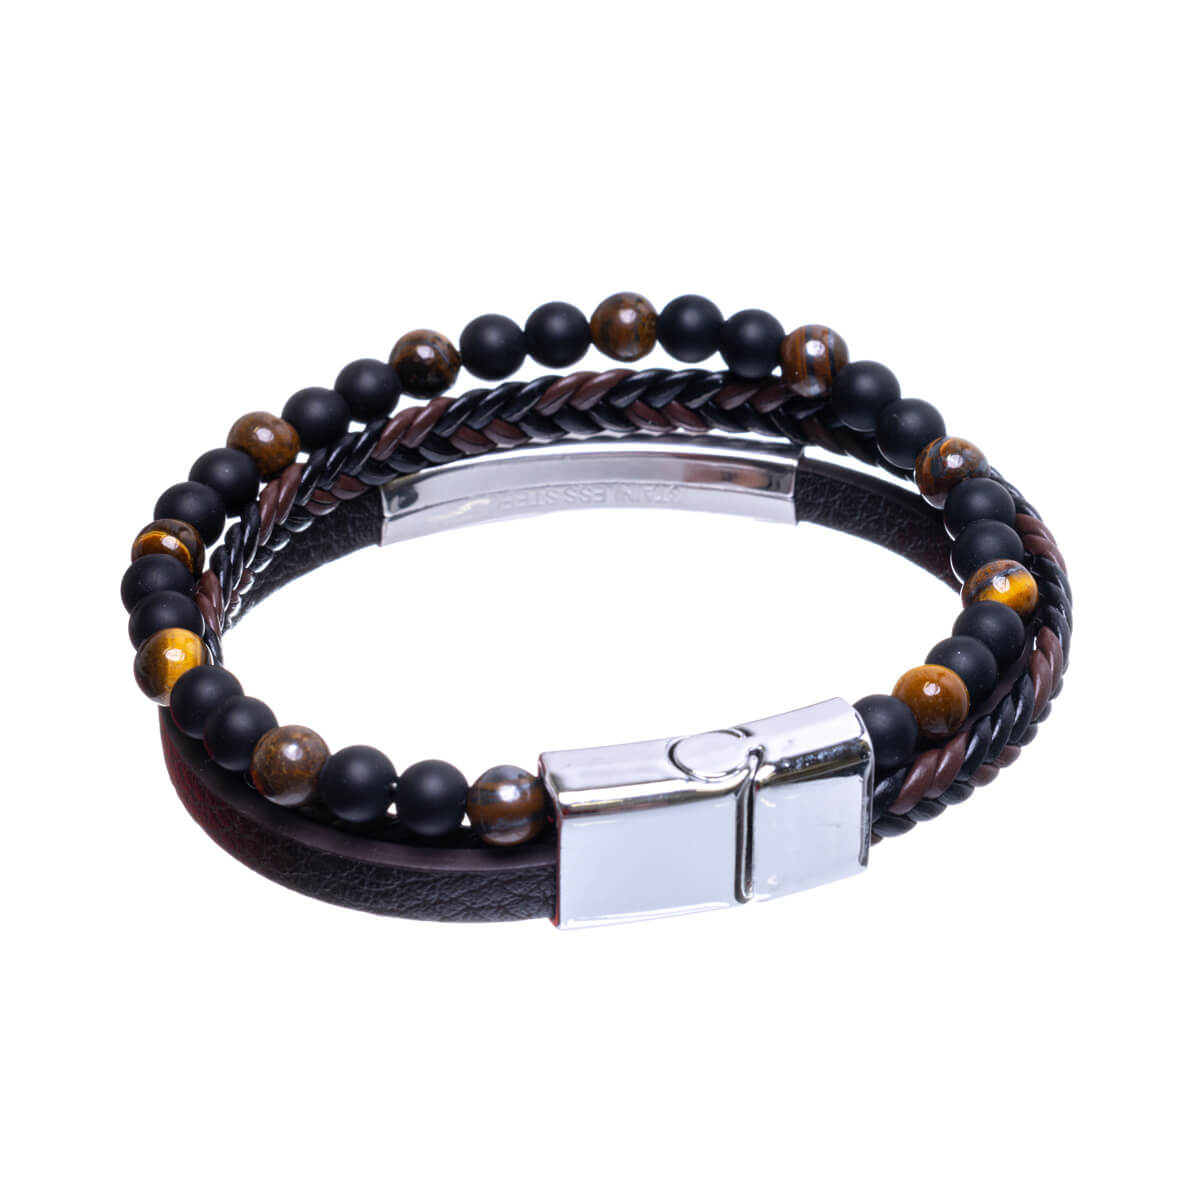 Three row bracelet with beads (Steel 316L)